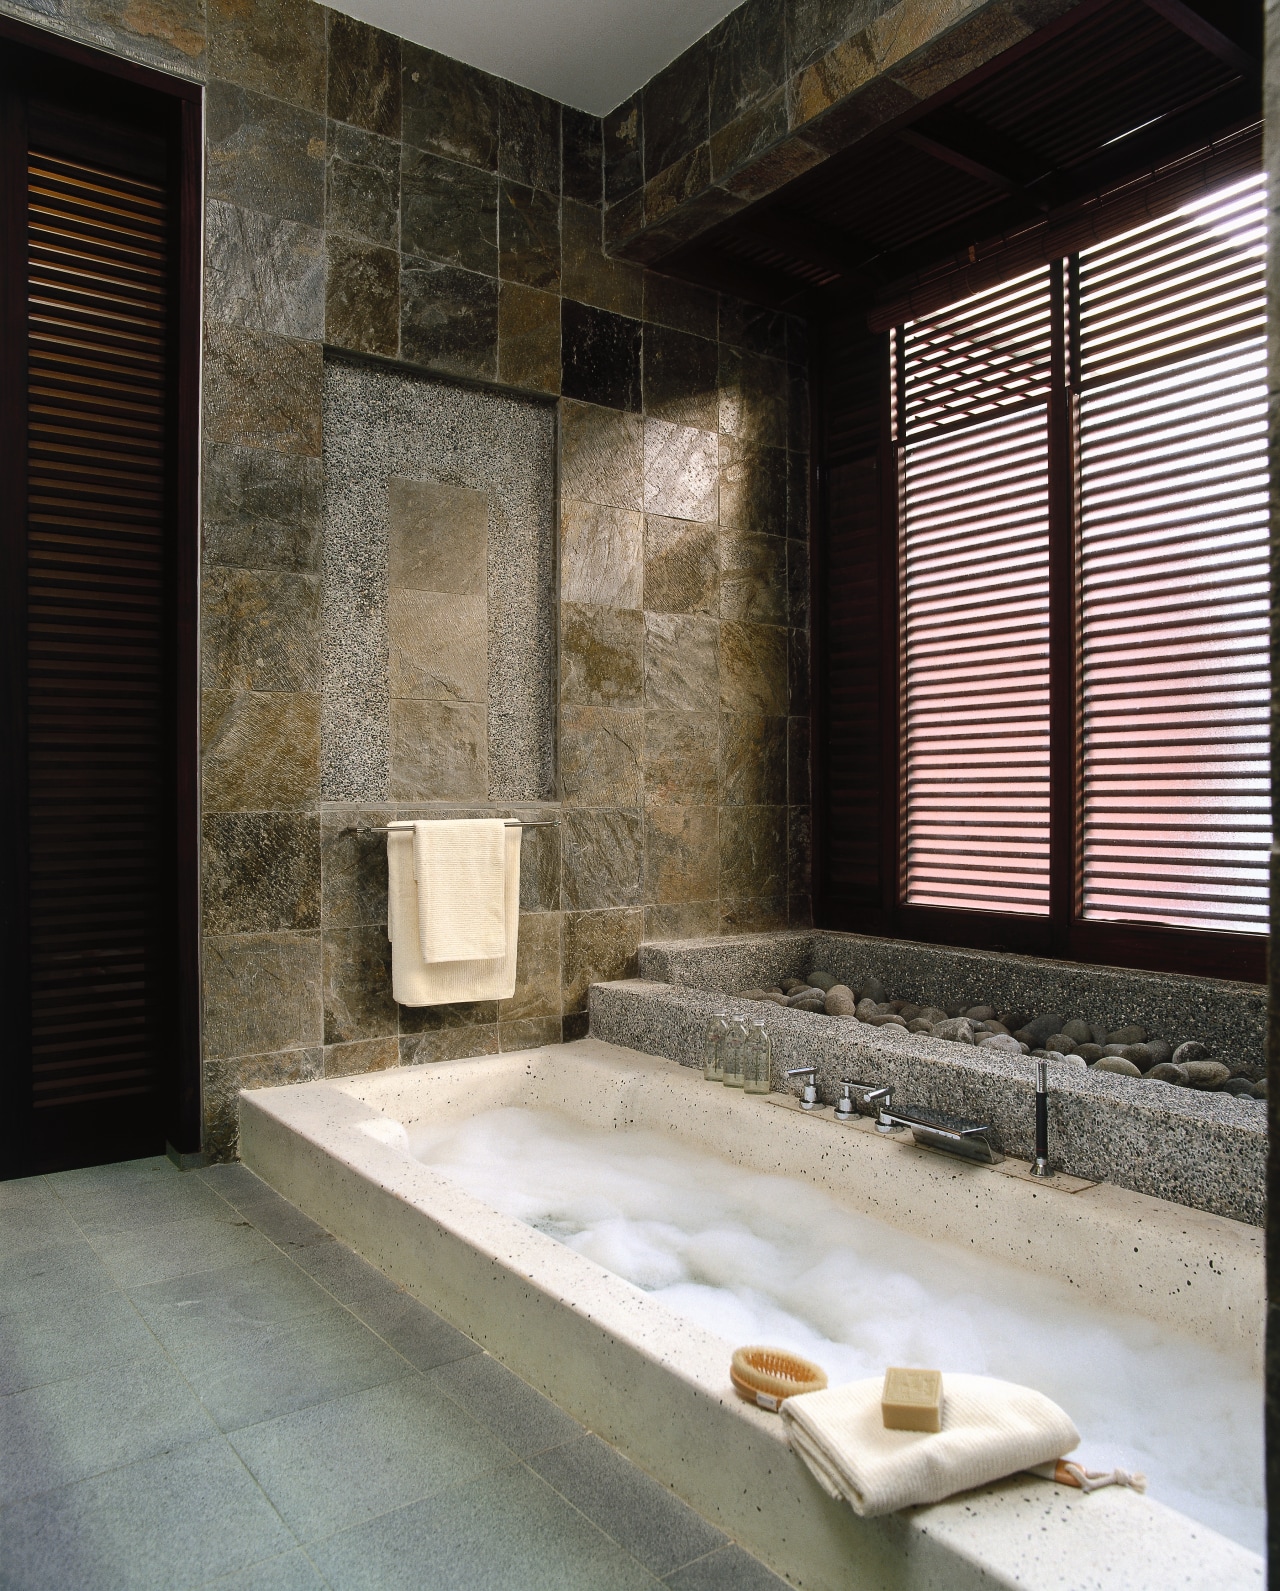 The bath area of an apartment architecture, bathroom, floor, interior design, tile, wall, window, black